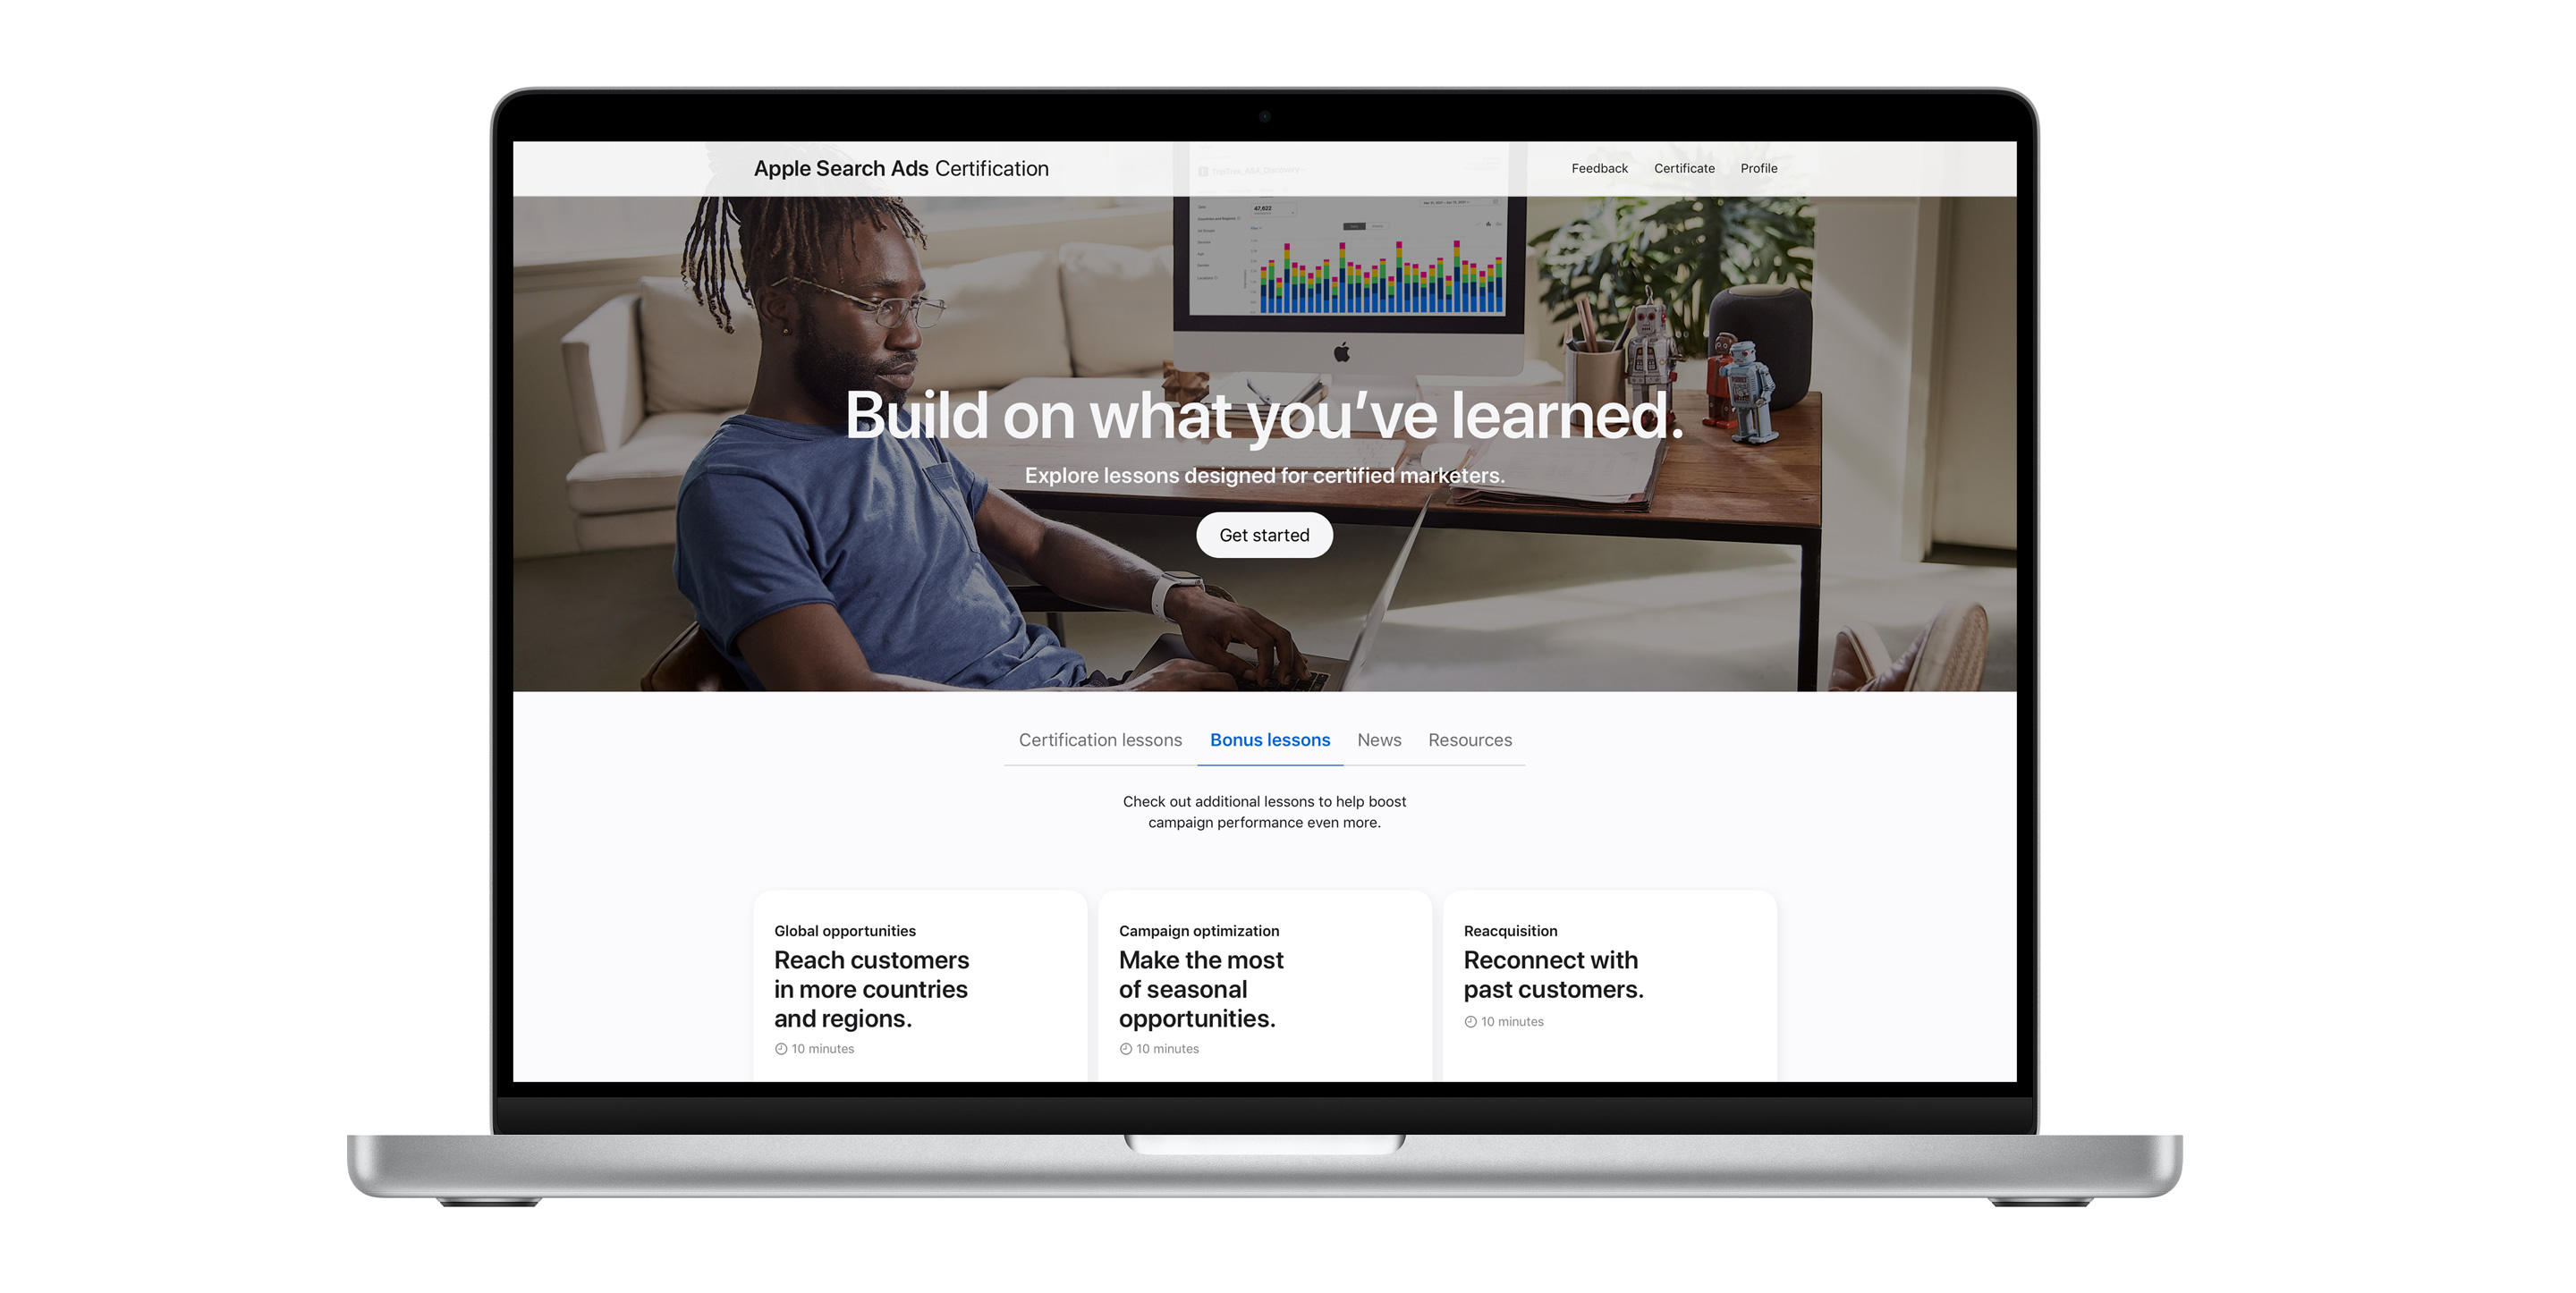 Apple Search Ads 认证页面显示“奖励课程”标签。其中显示了三个有助于提升广告系列效果的课程。